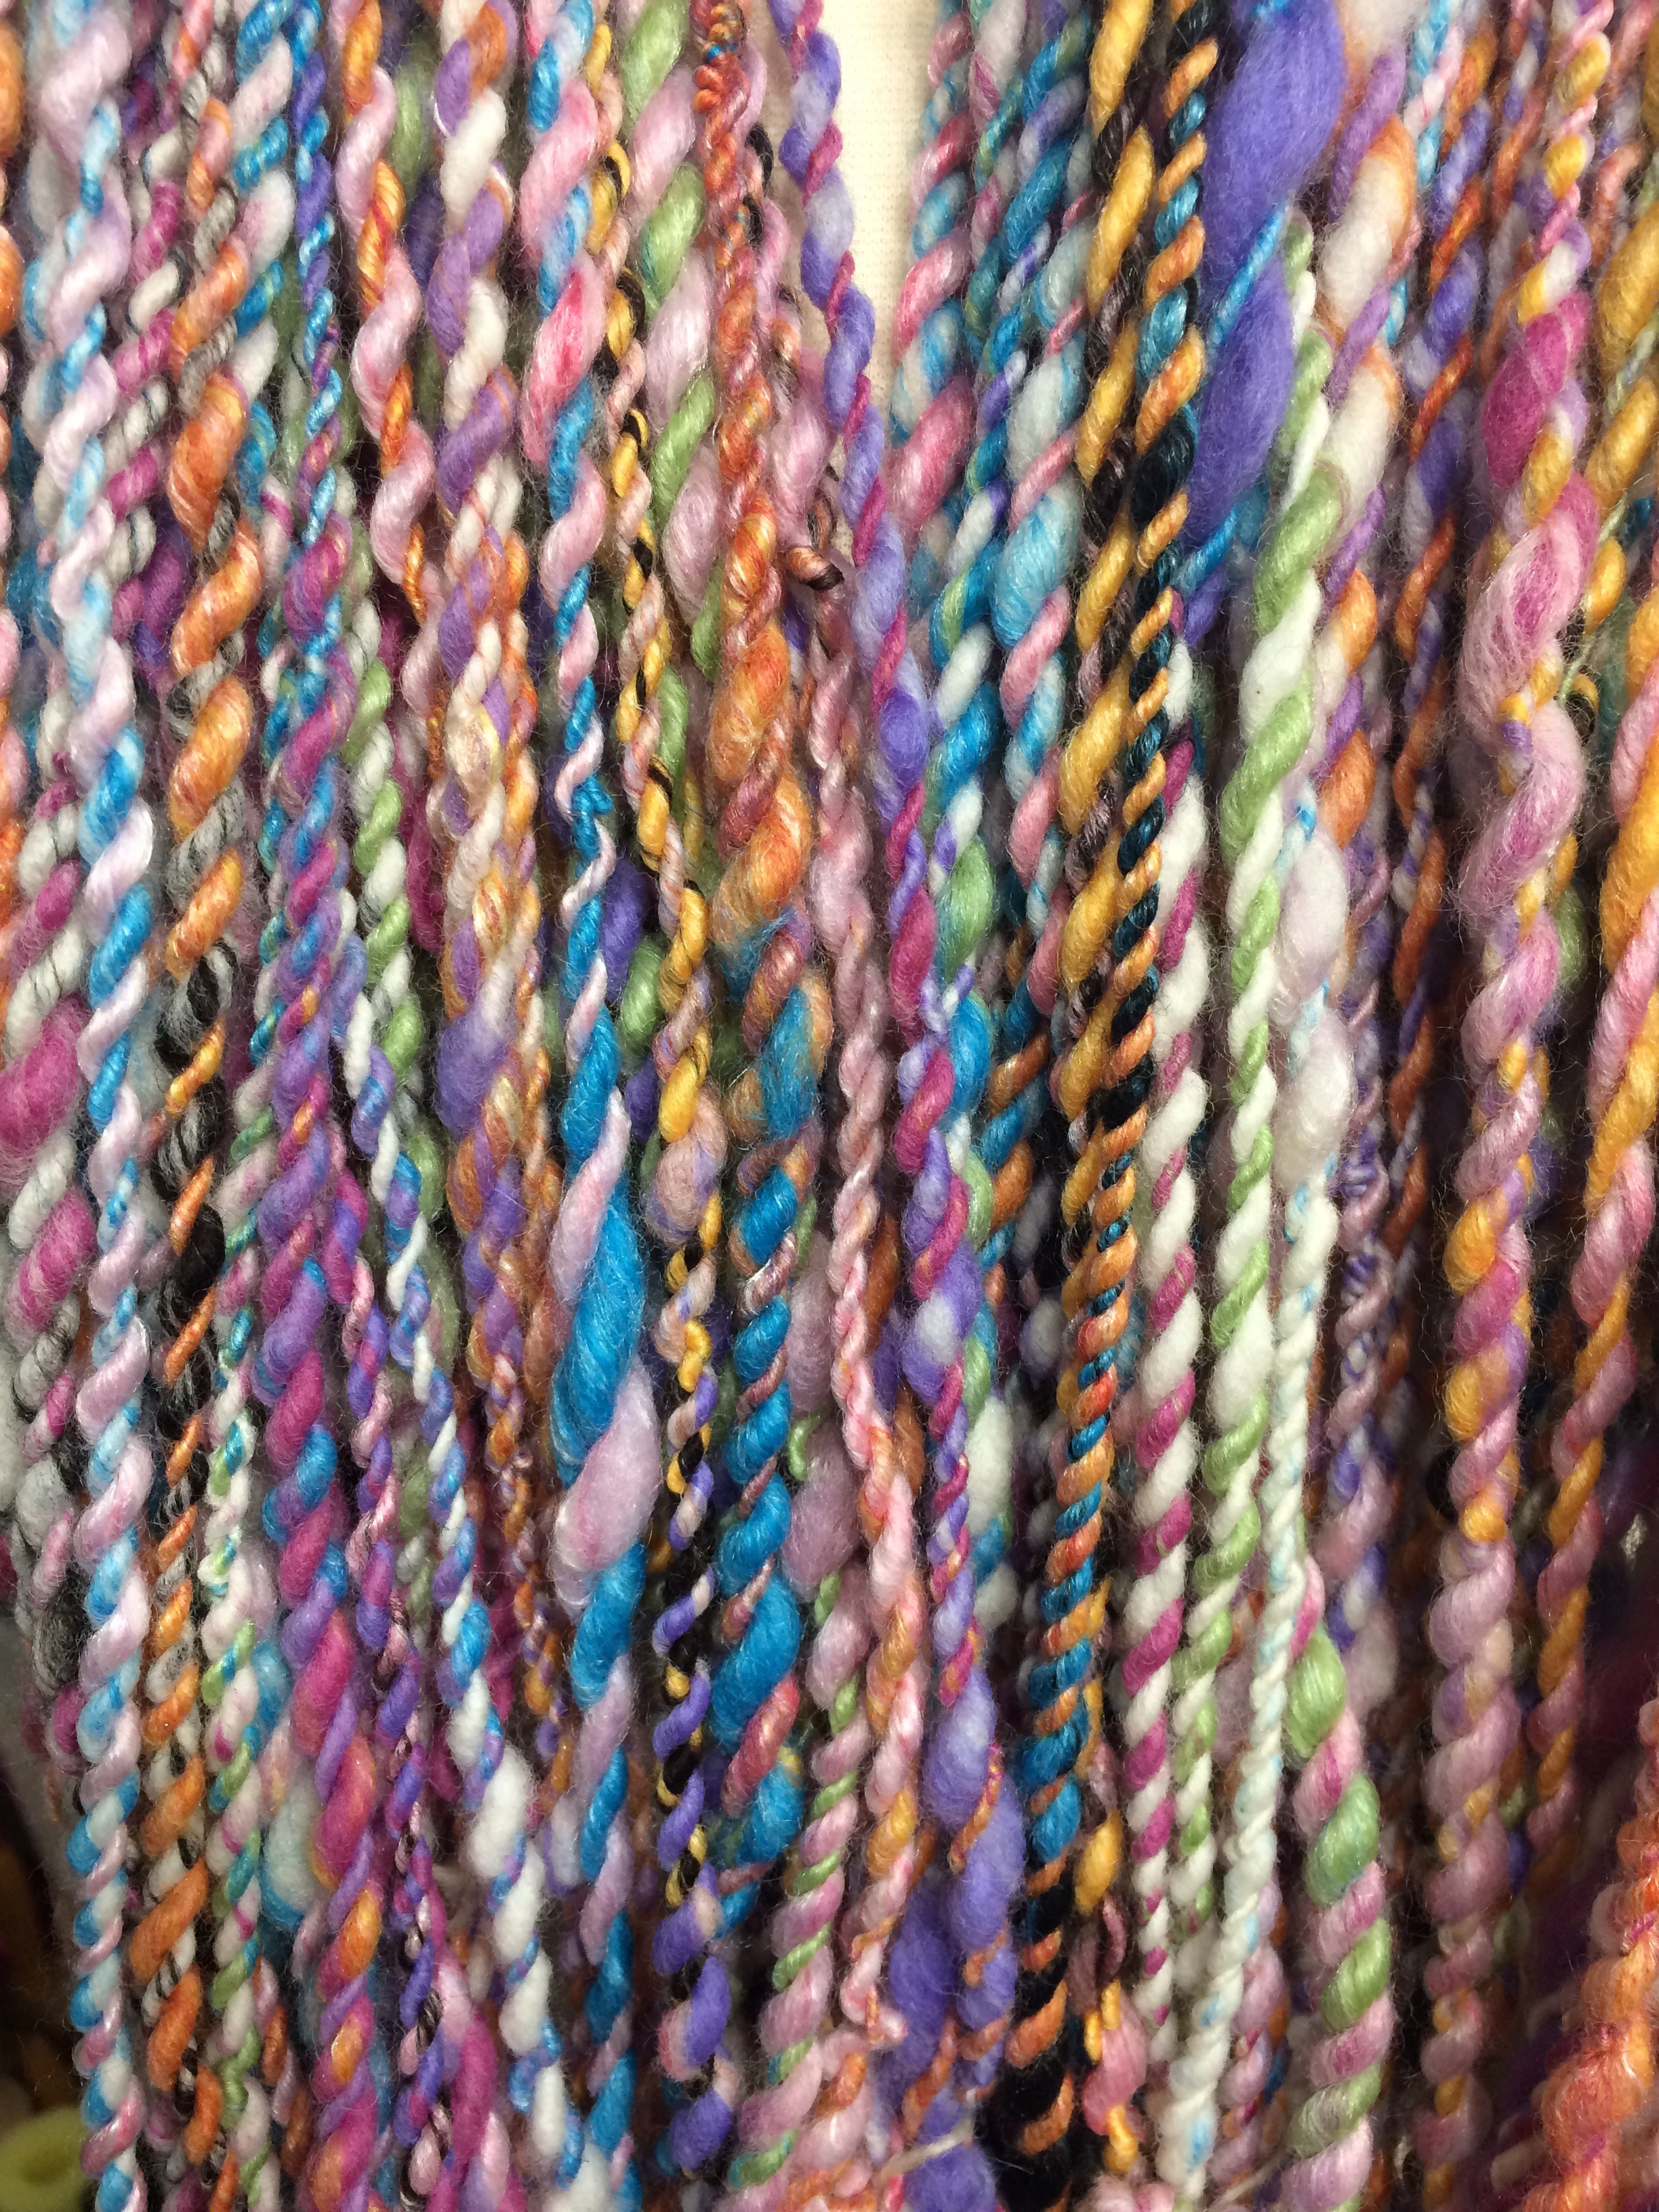 More colorful yarn. – Michele Ballantyne